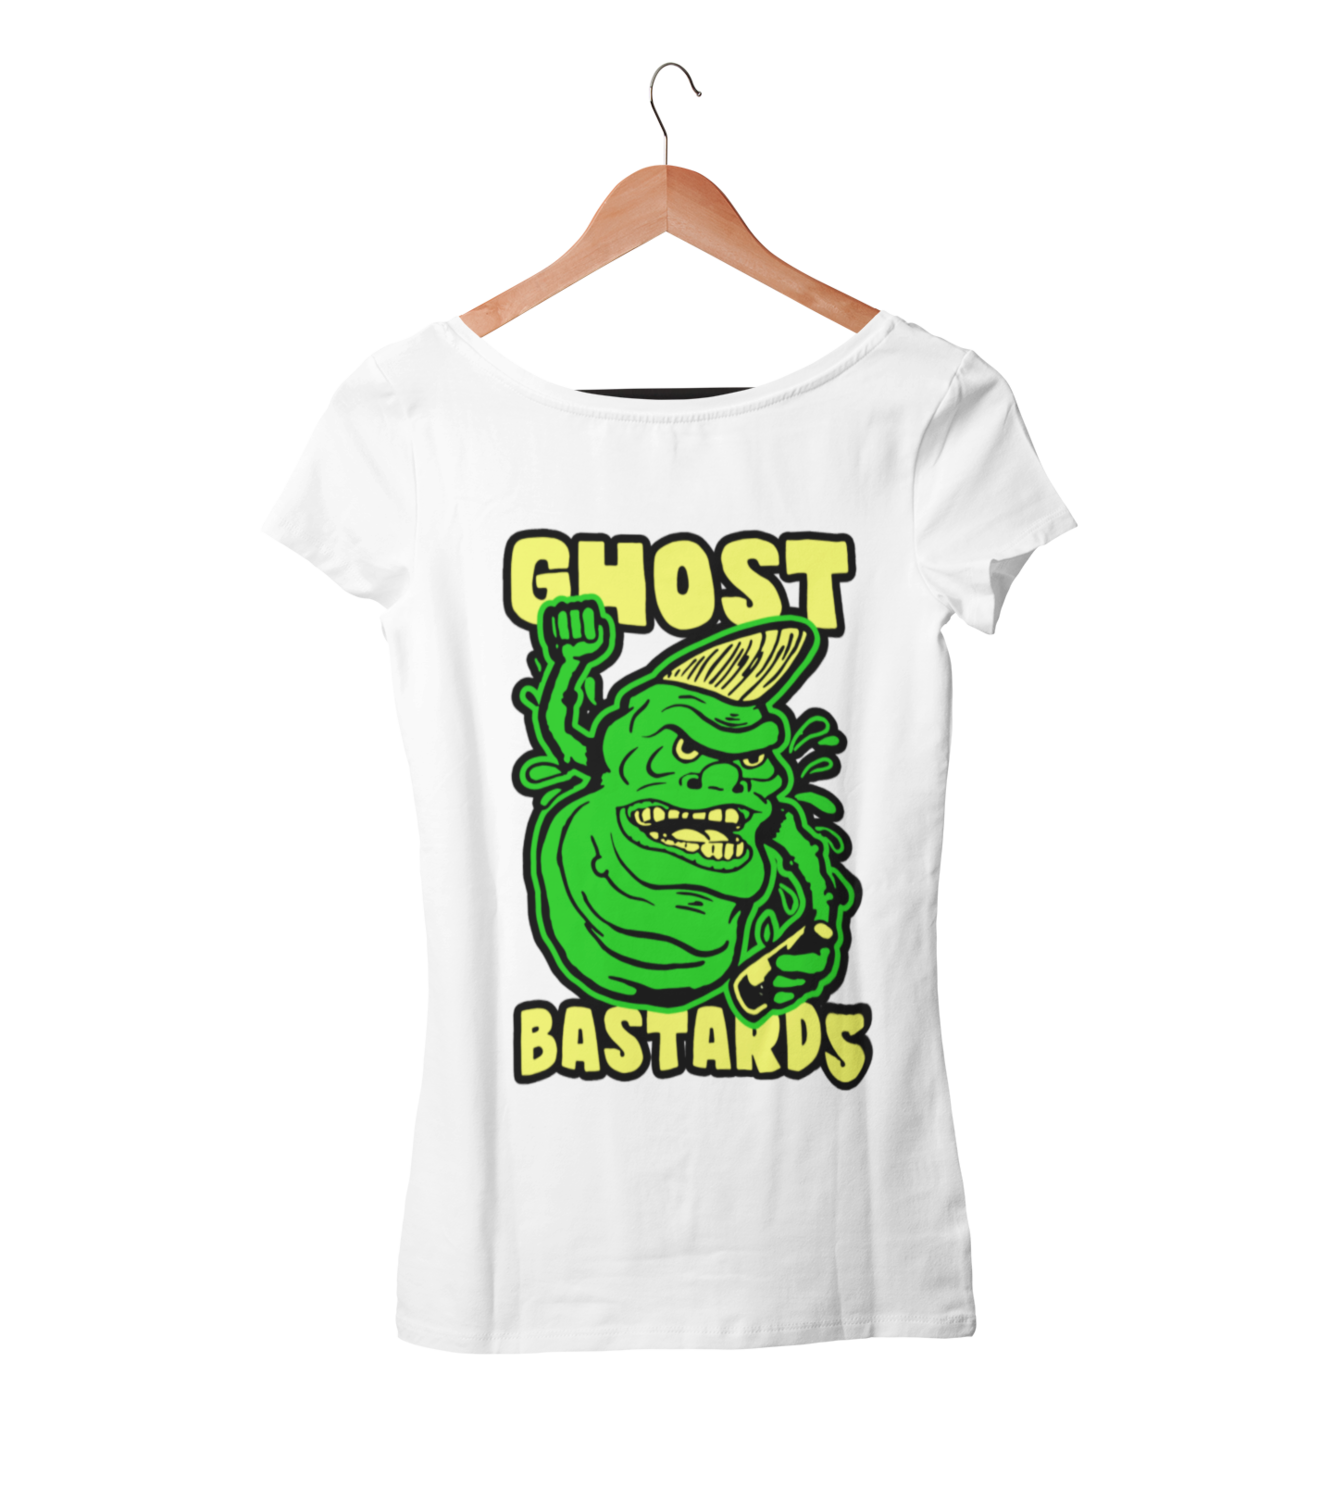 GHOST BASTARDS "Logo" tshirt for WOMEN